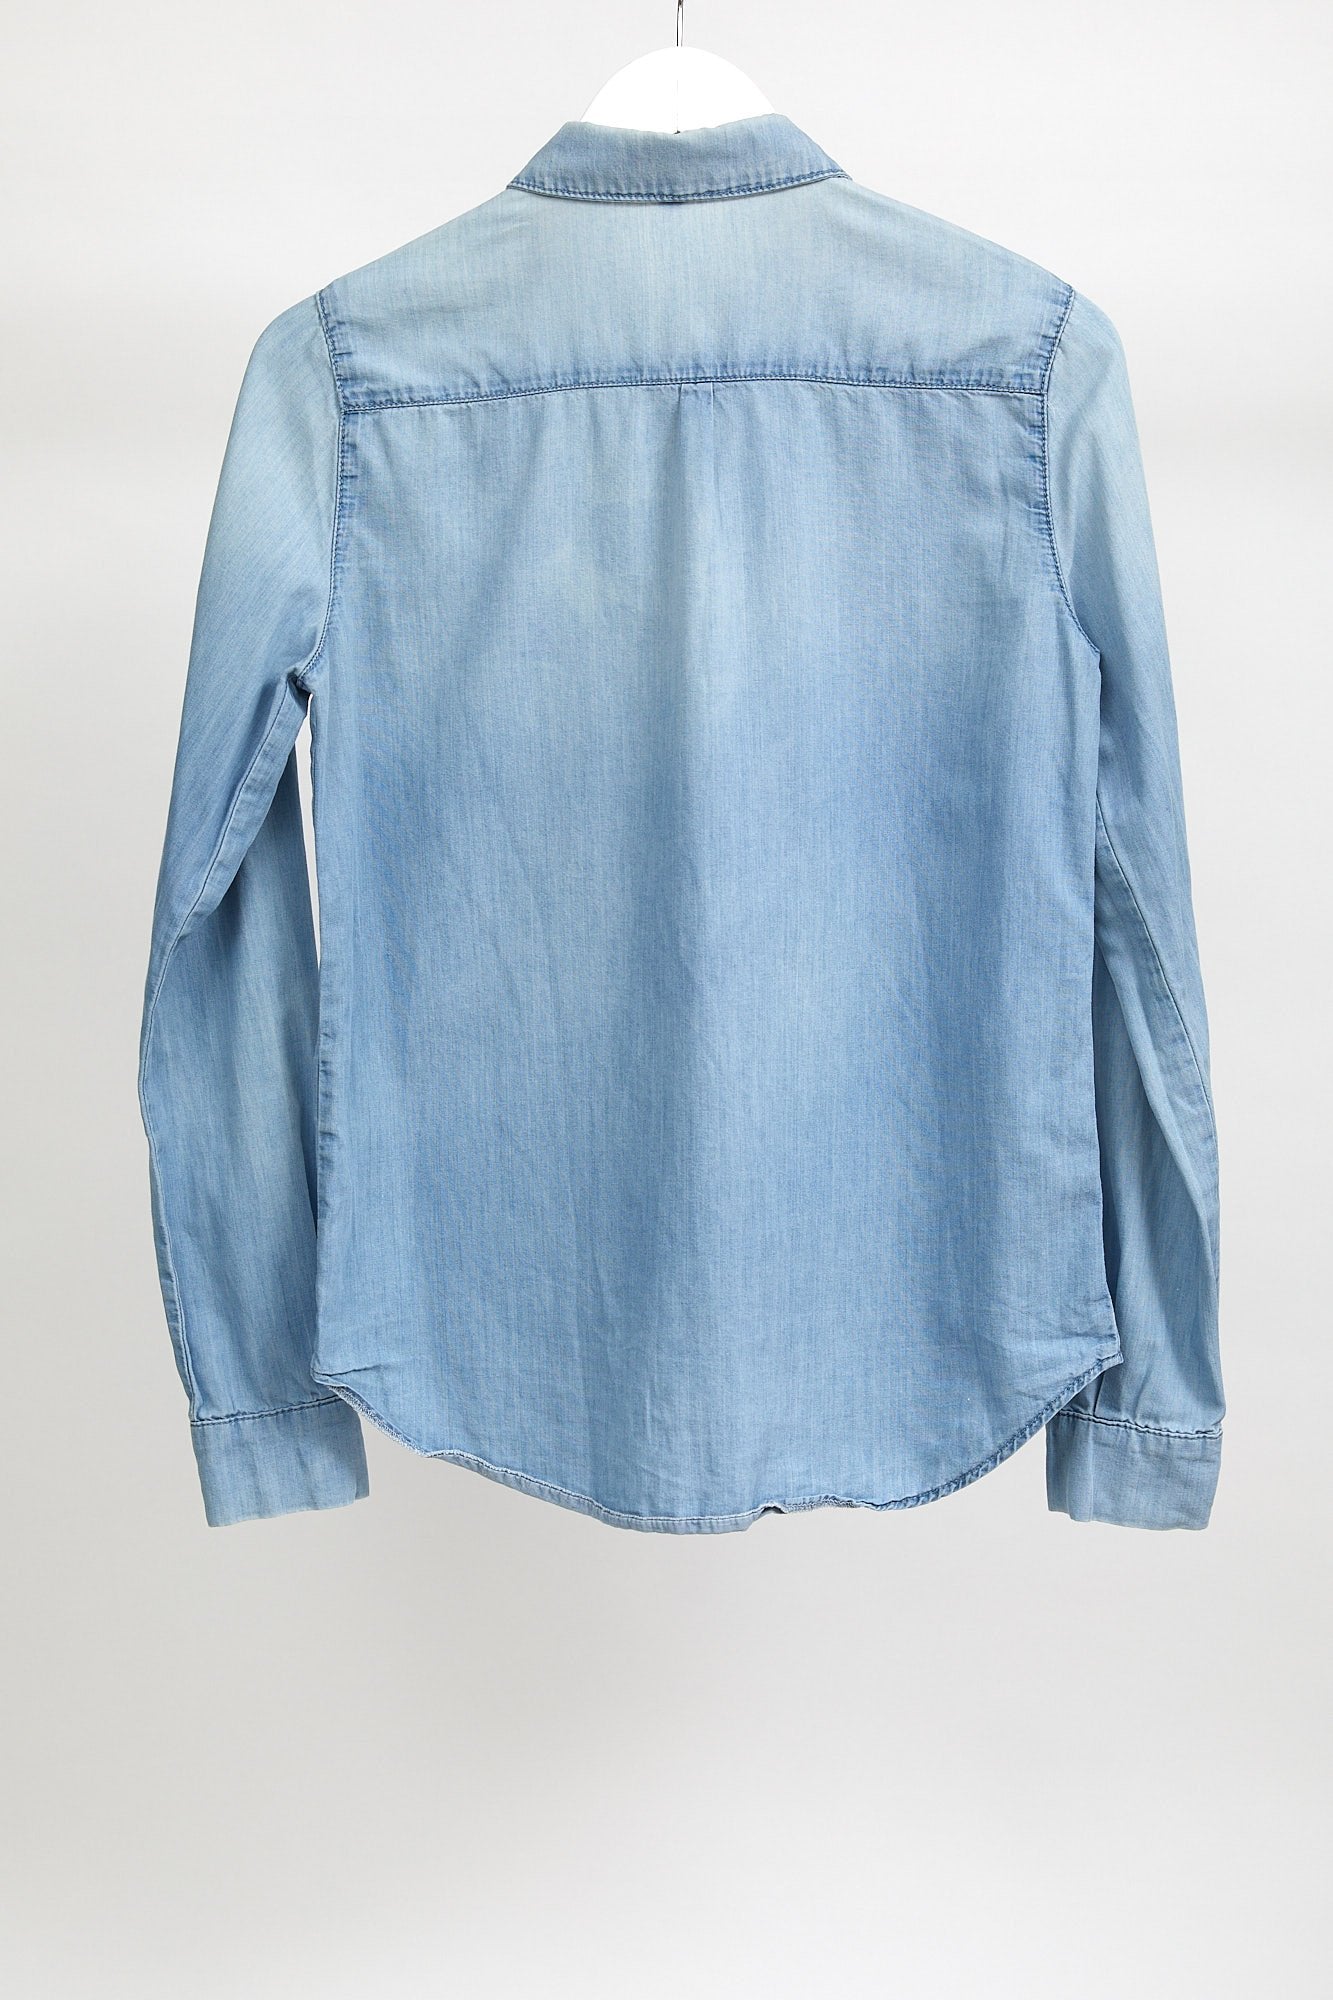 Womens Blue Denim Topshop Shirt: Size Small